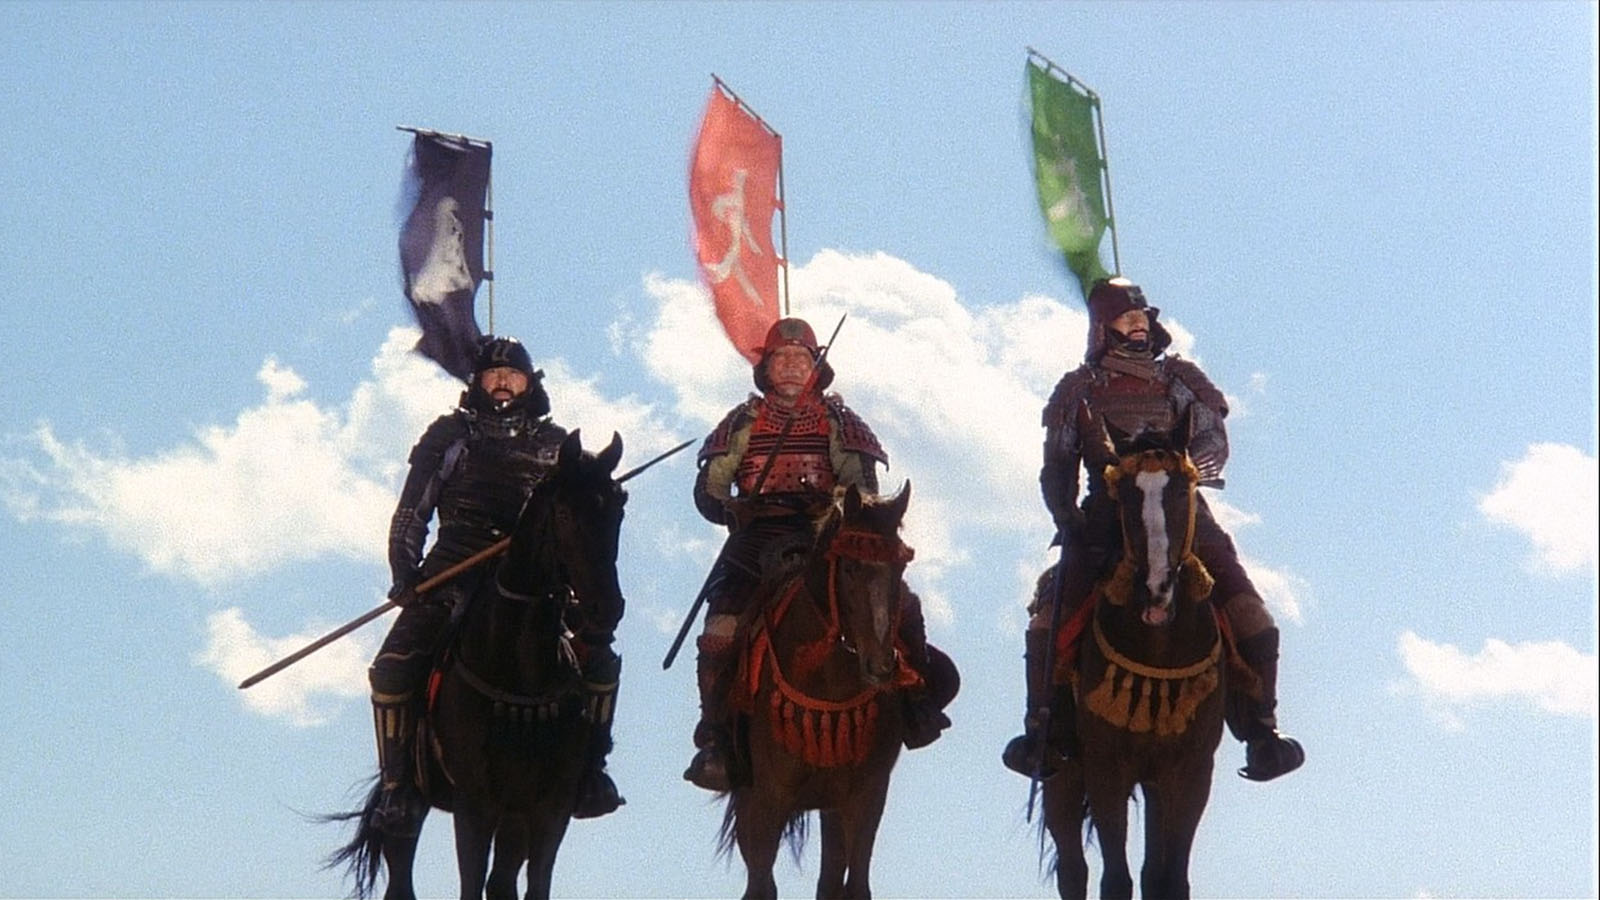 Kurosawa’s Kagemusha served as a big inspiration for Filoni and the Ahsoka team.